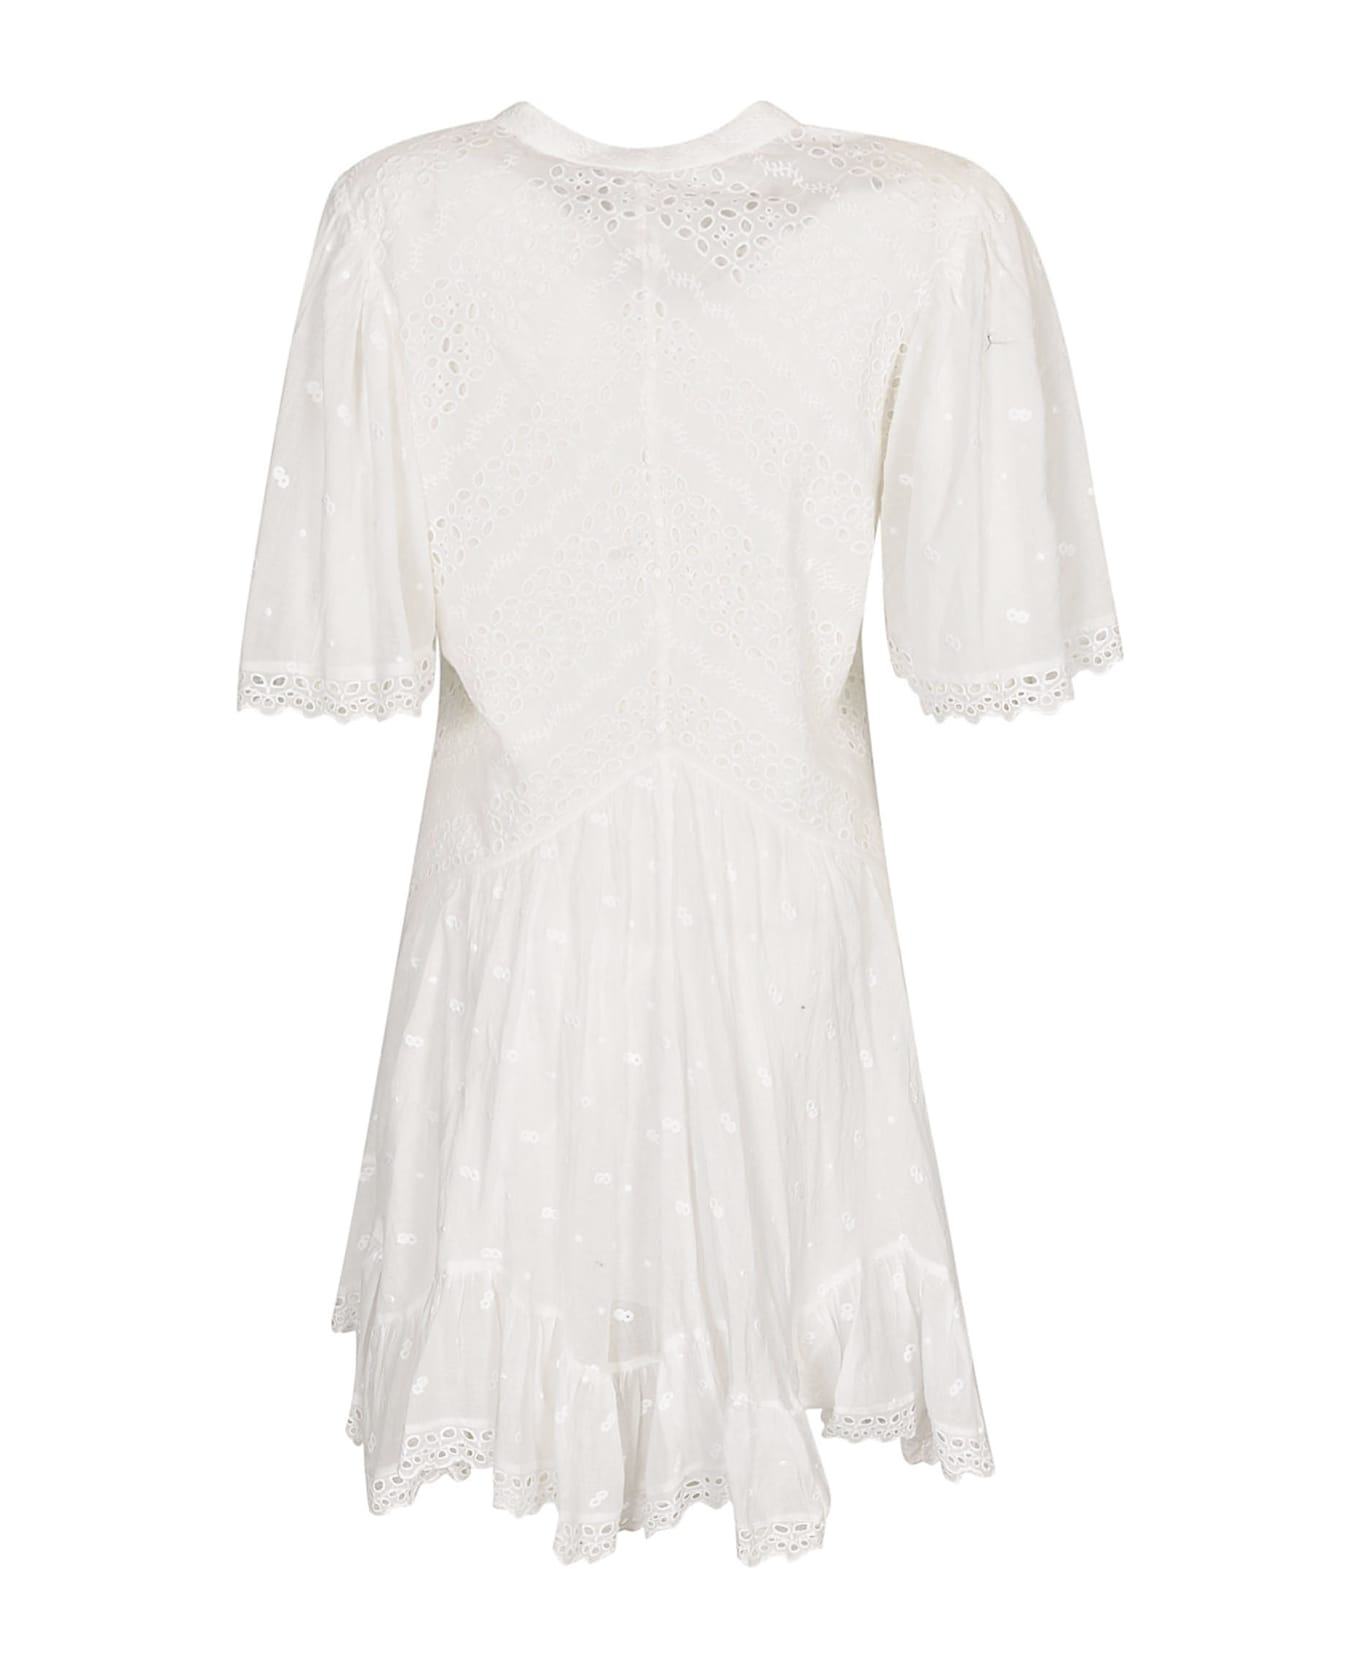 Marant Étoile Slayae Dress - White